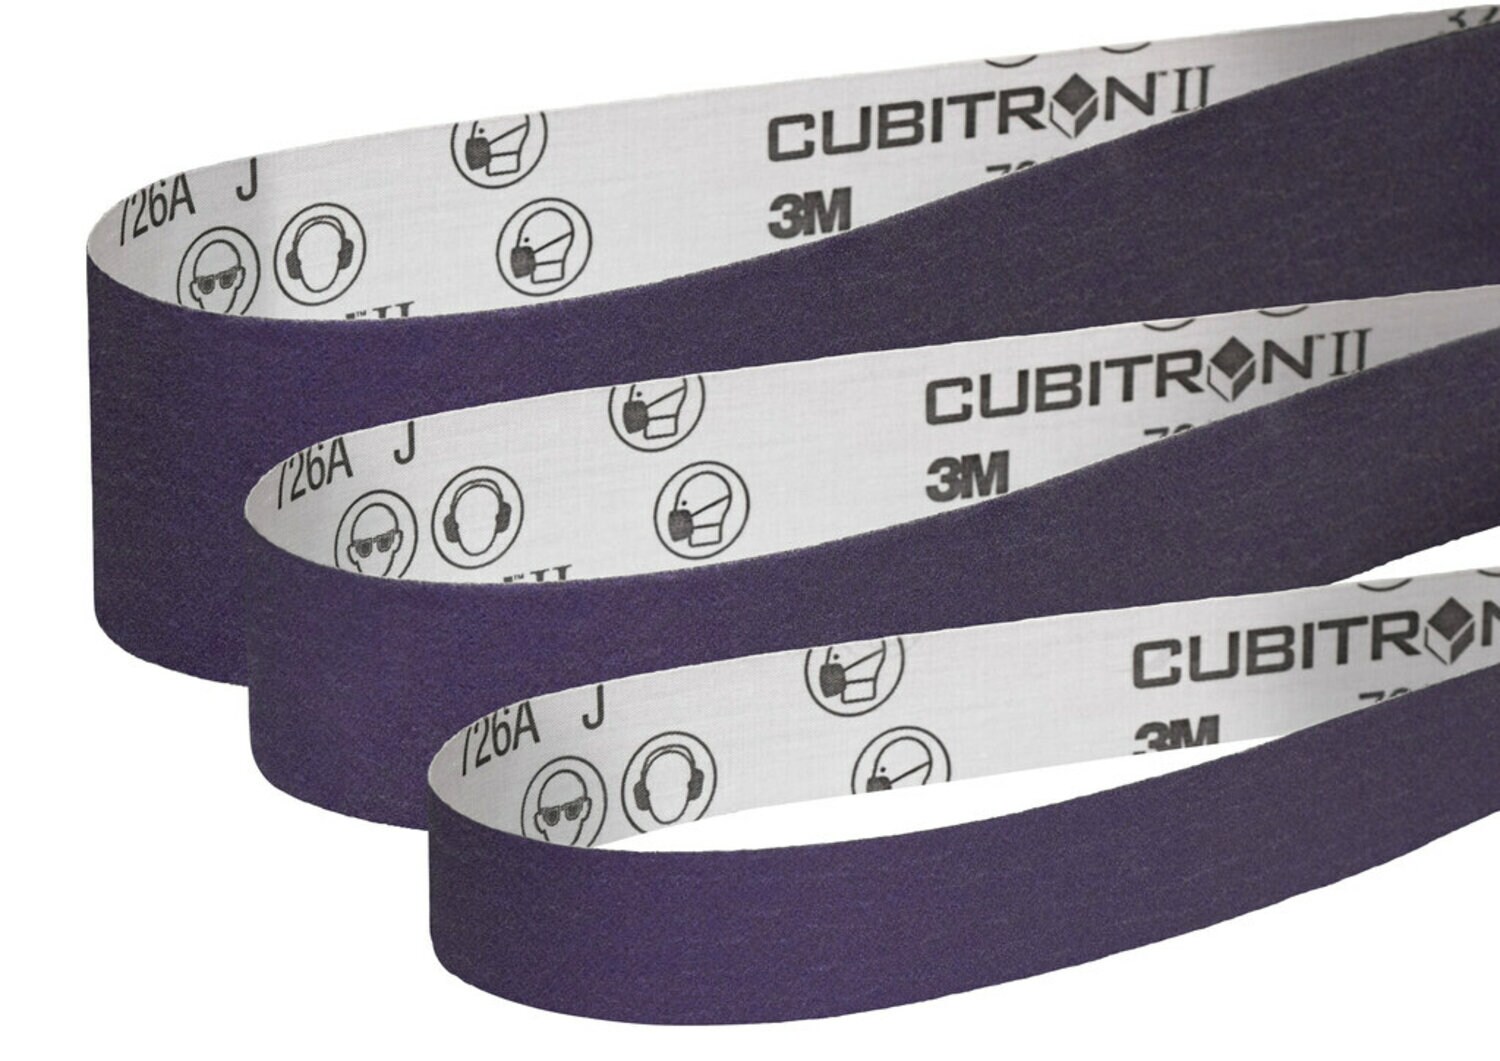 7100289607 - 3M Cubitron II Cloth Belt 726A, 180+ J-weight, Config